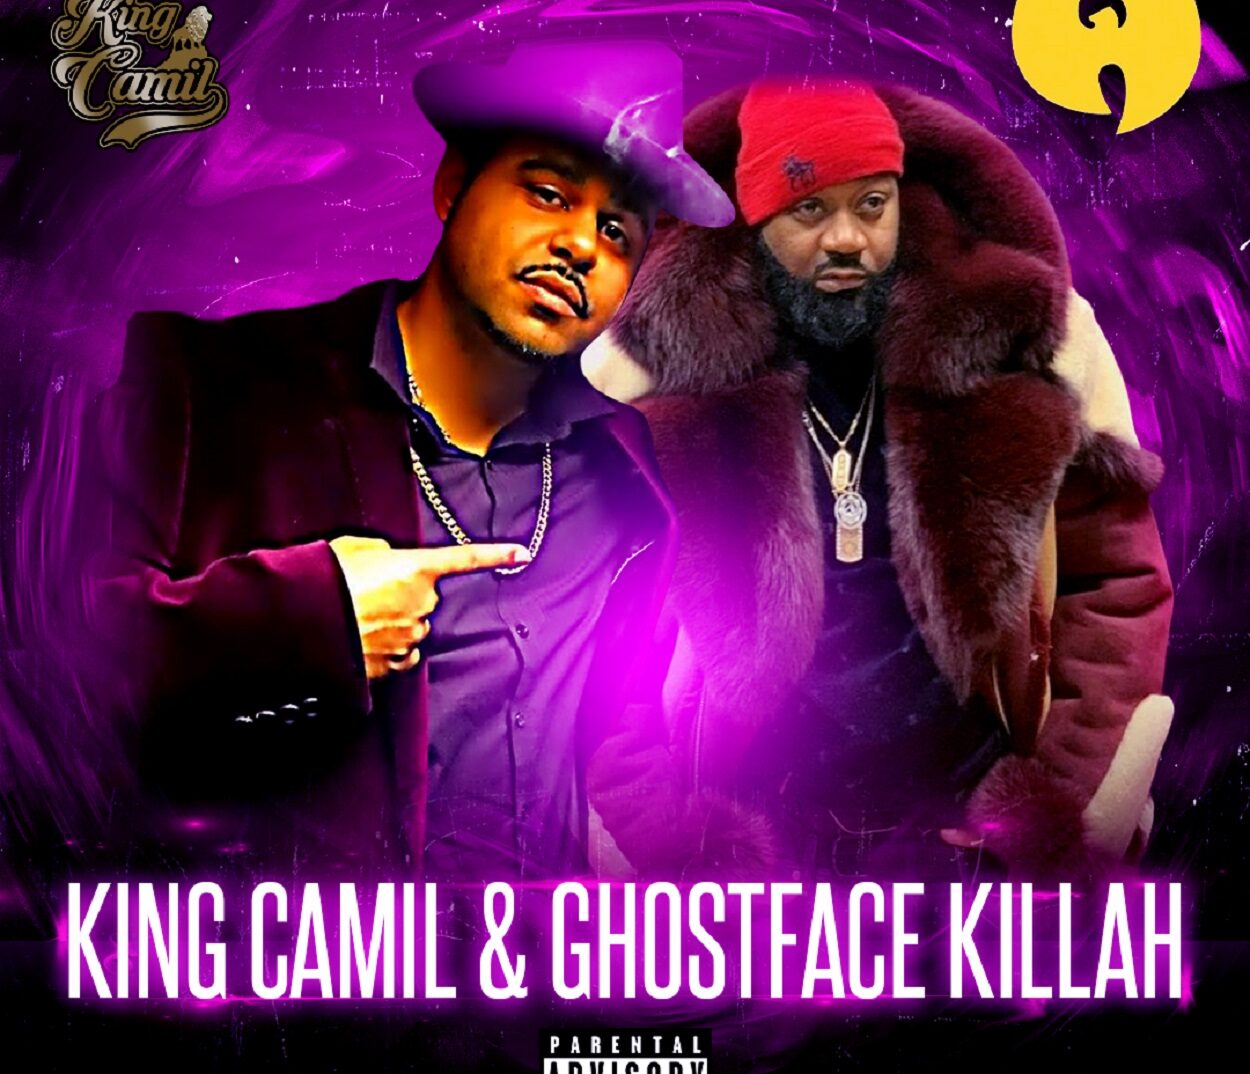 King Camil & Wutang’s Ghostface Killah